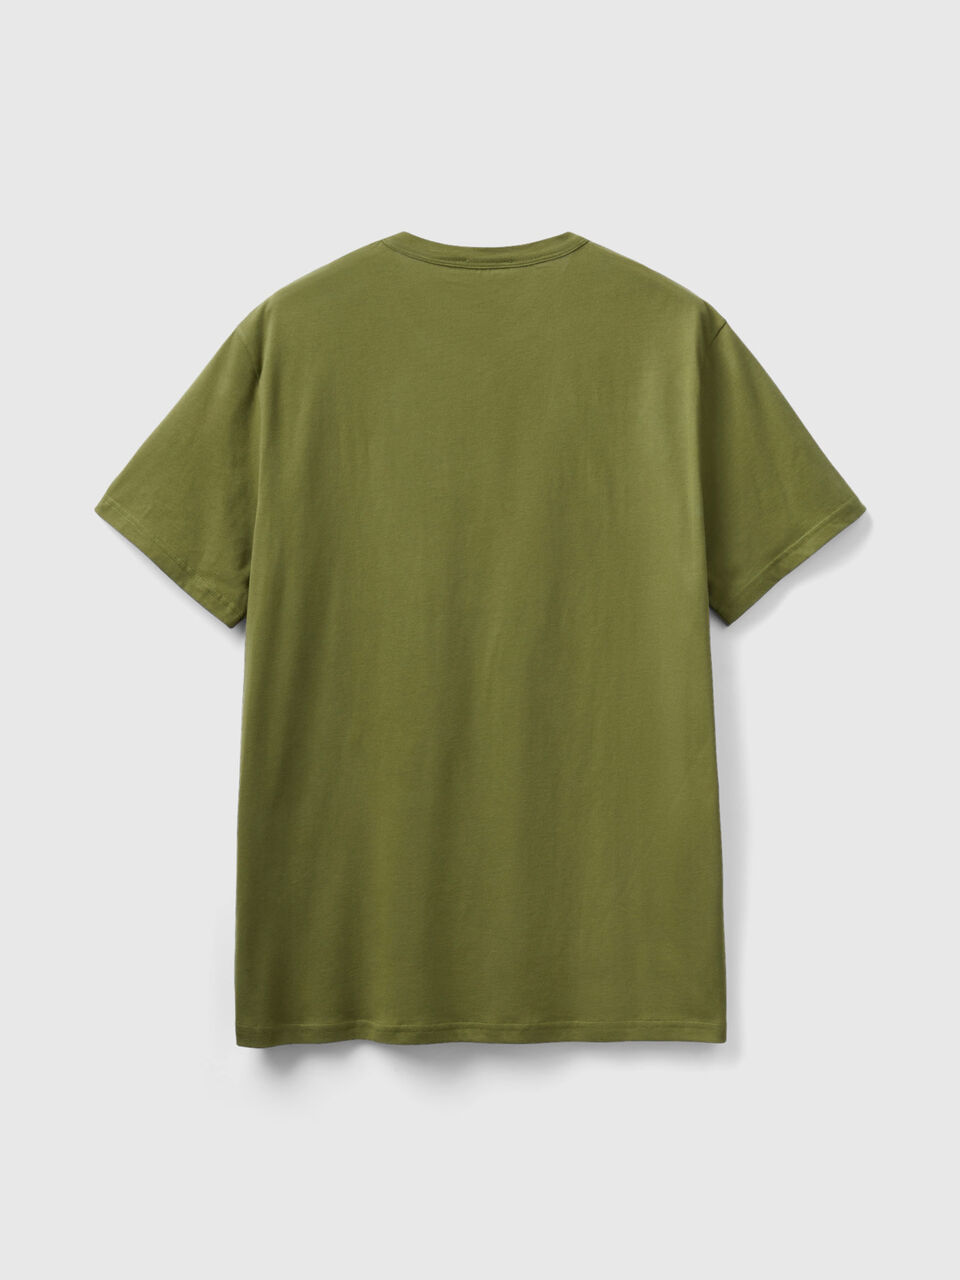 T-shirt in warm cotton - Military Green | Benetton